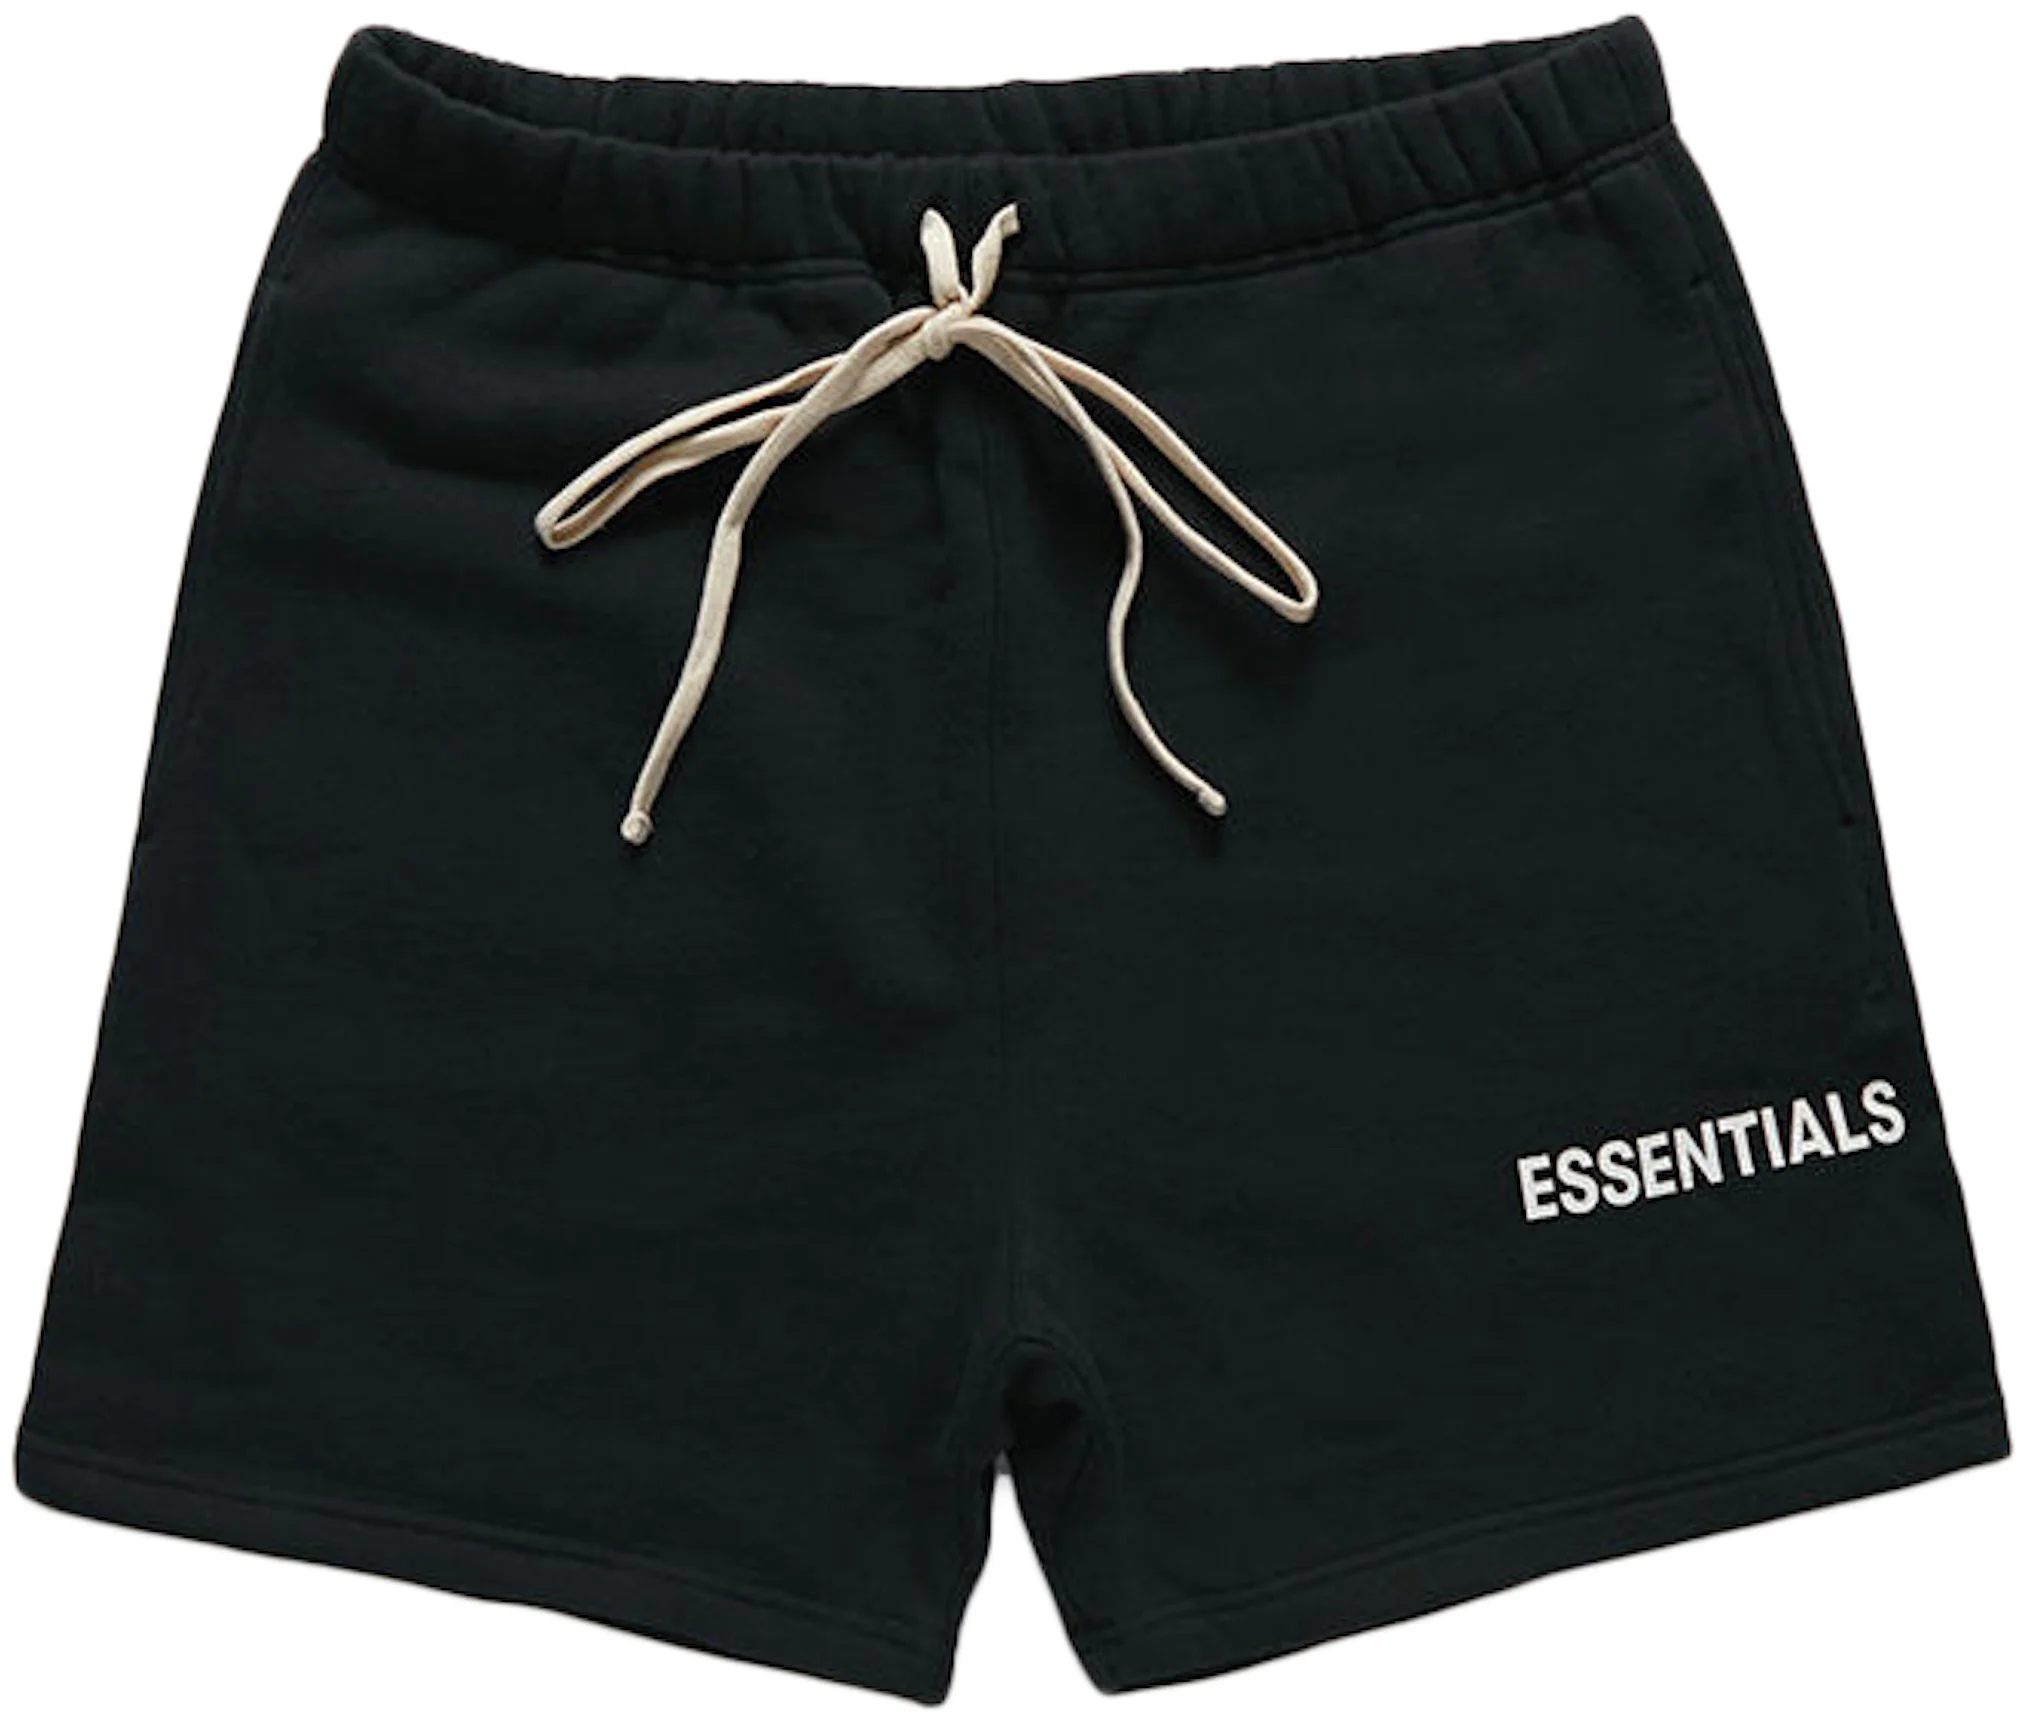 Fear of God Essentials Graphic Sweat Shorts Black Men's - Essentials - US